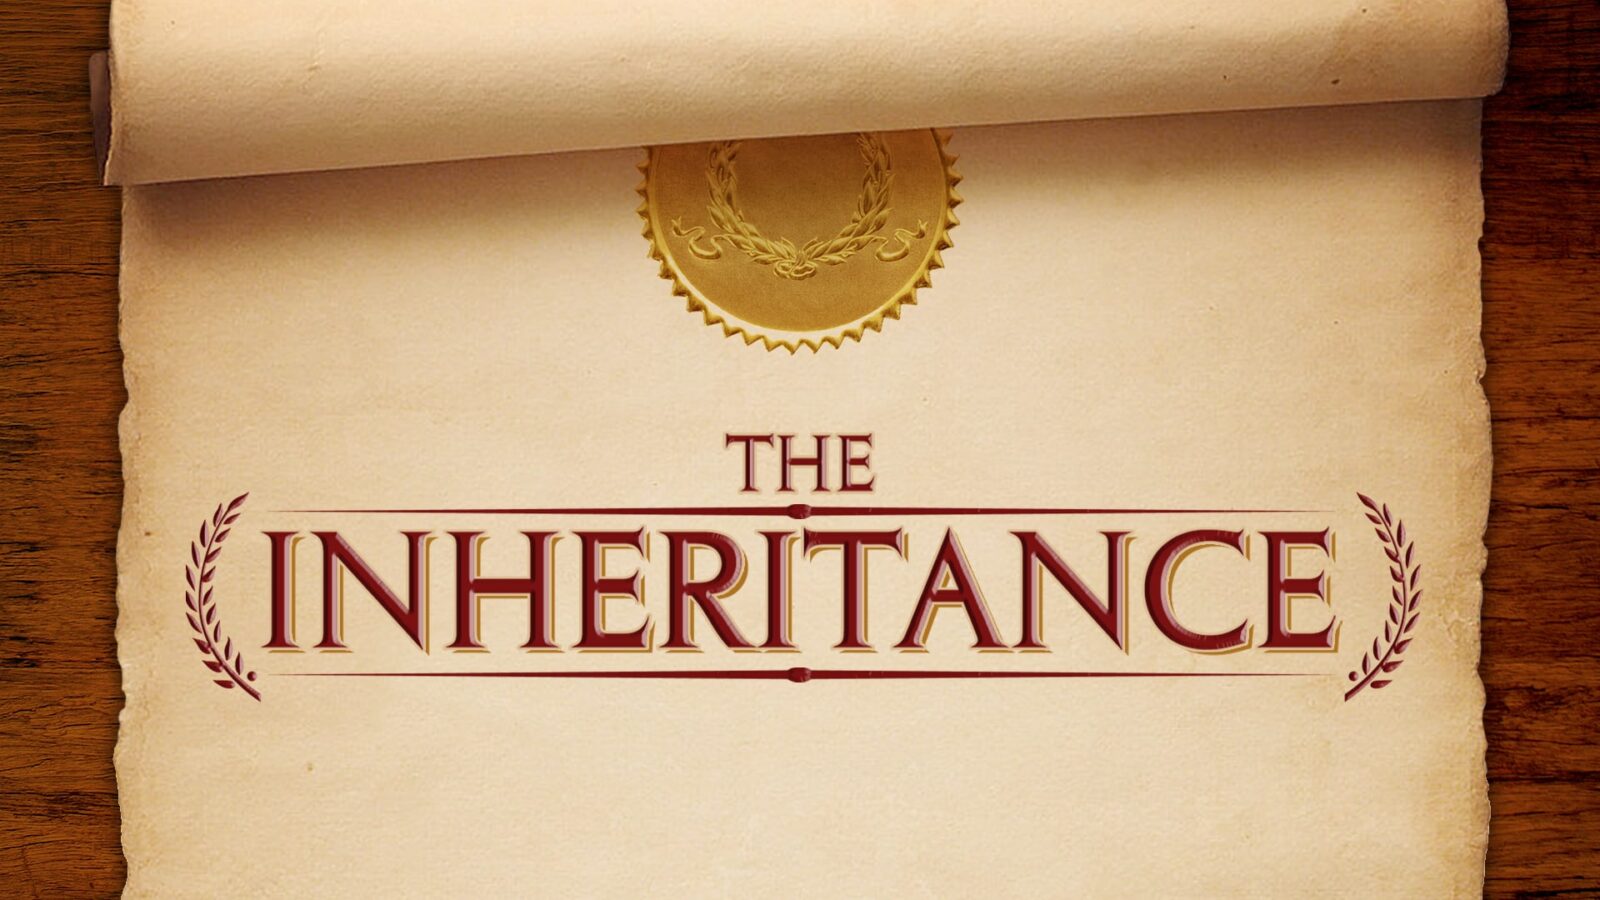 Extract an Inheritance Certificate